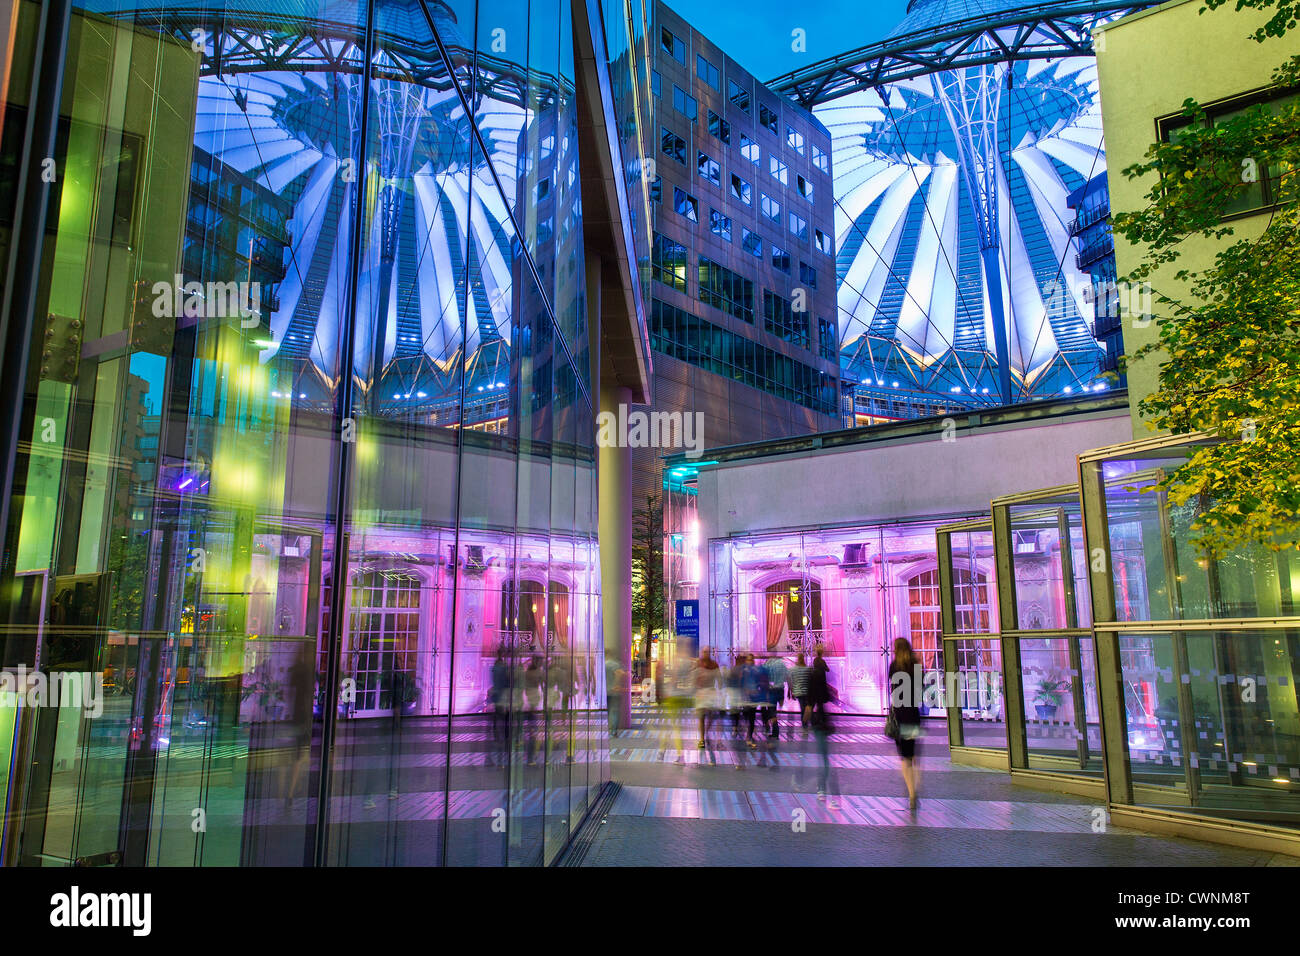 Europe, Germany, Berlin, The canopy of the Sony Center in Potsdamer Platz Stock Photo